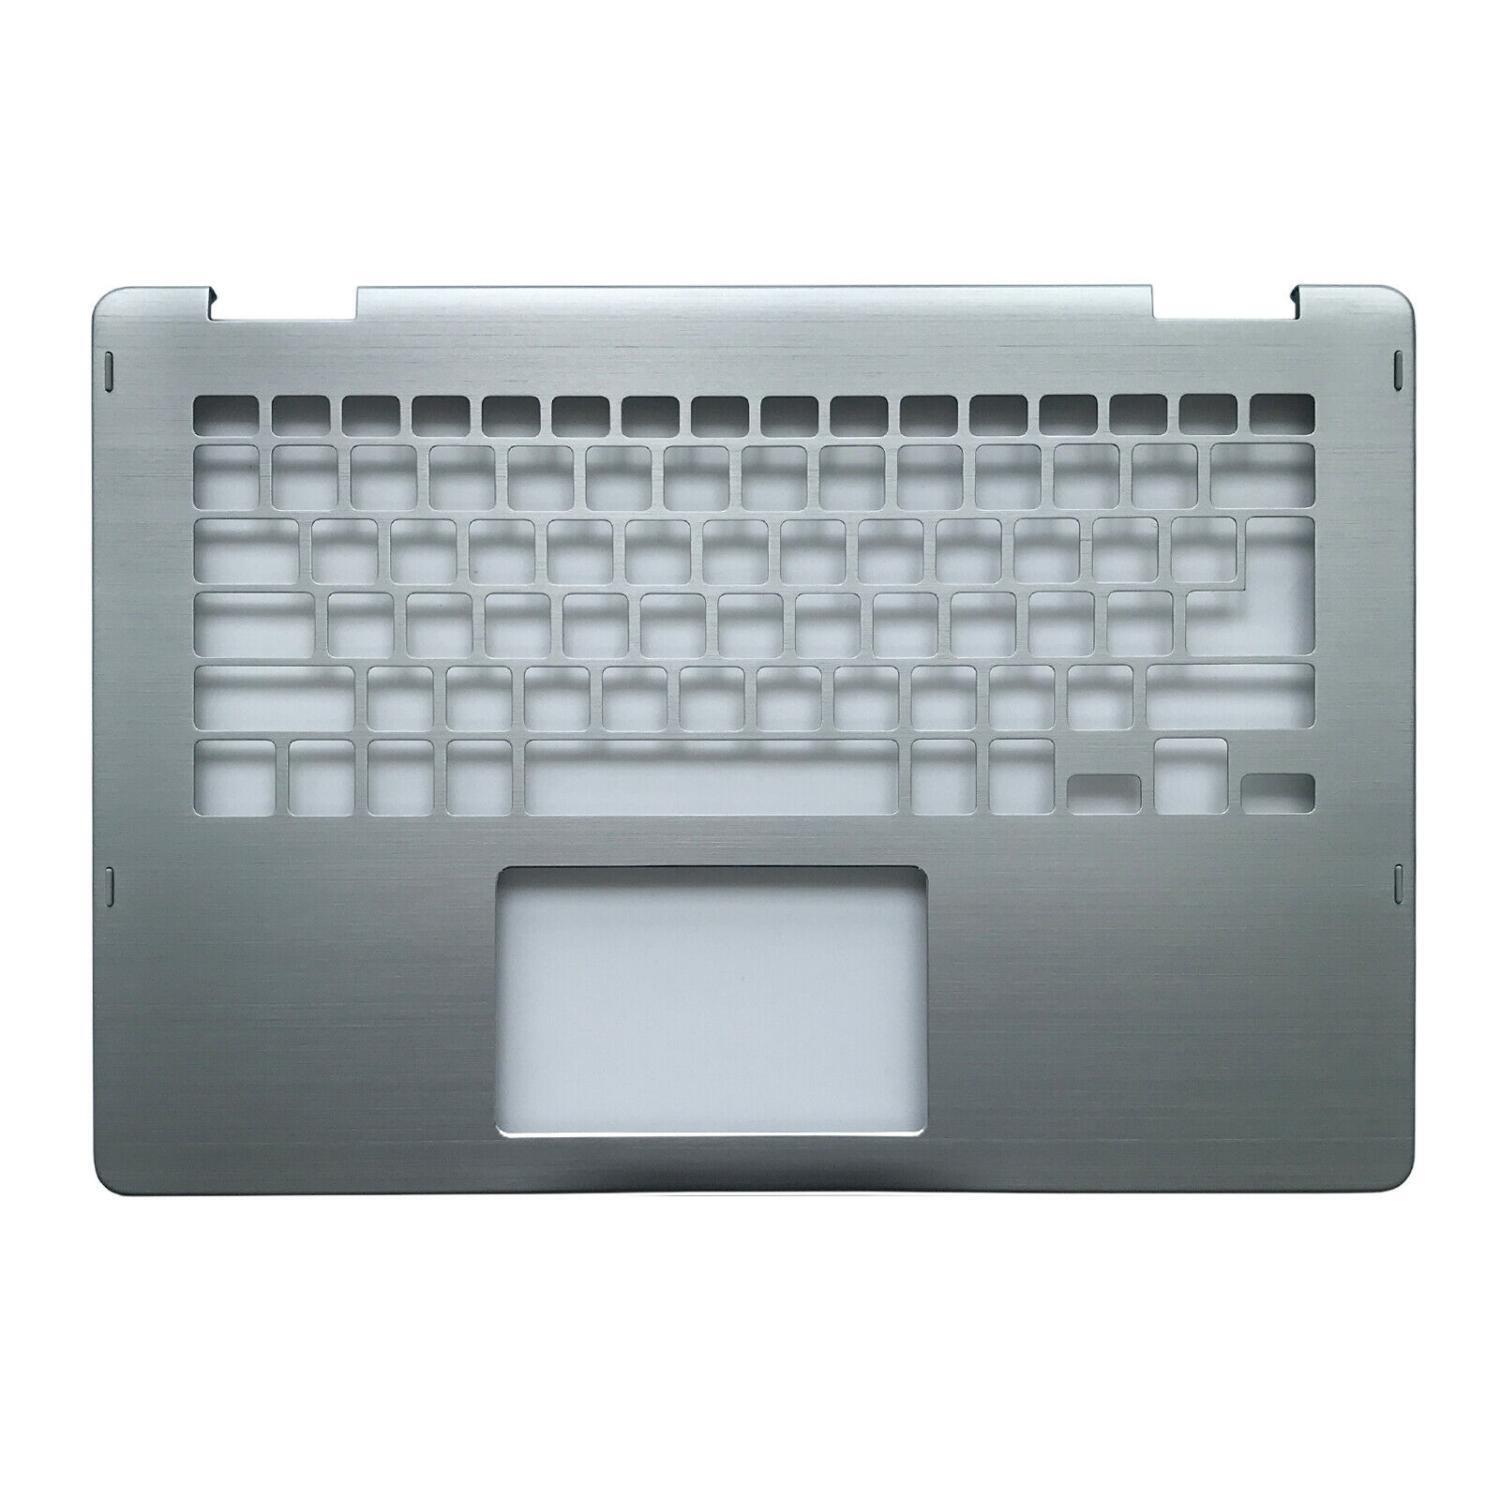 New 08CGT0 Palmrest Upper Case For Dell Inspiron 13MF 7368 7378 Keyboard Bezel